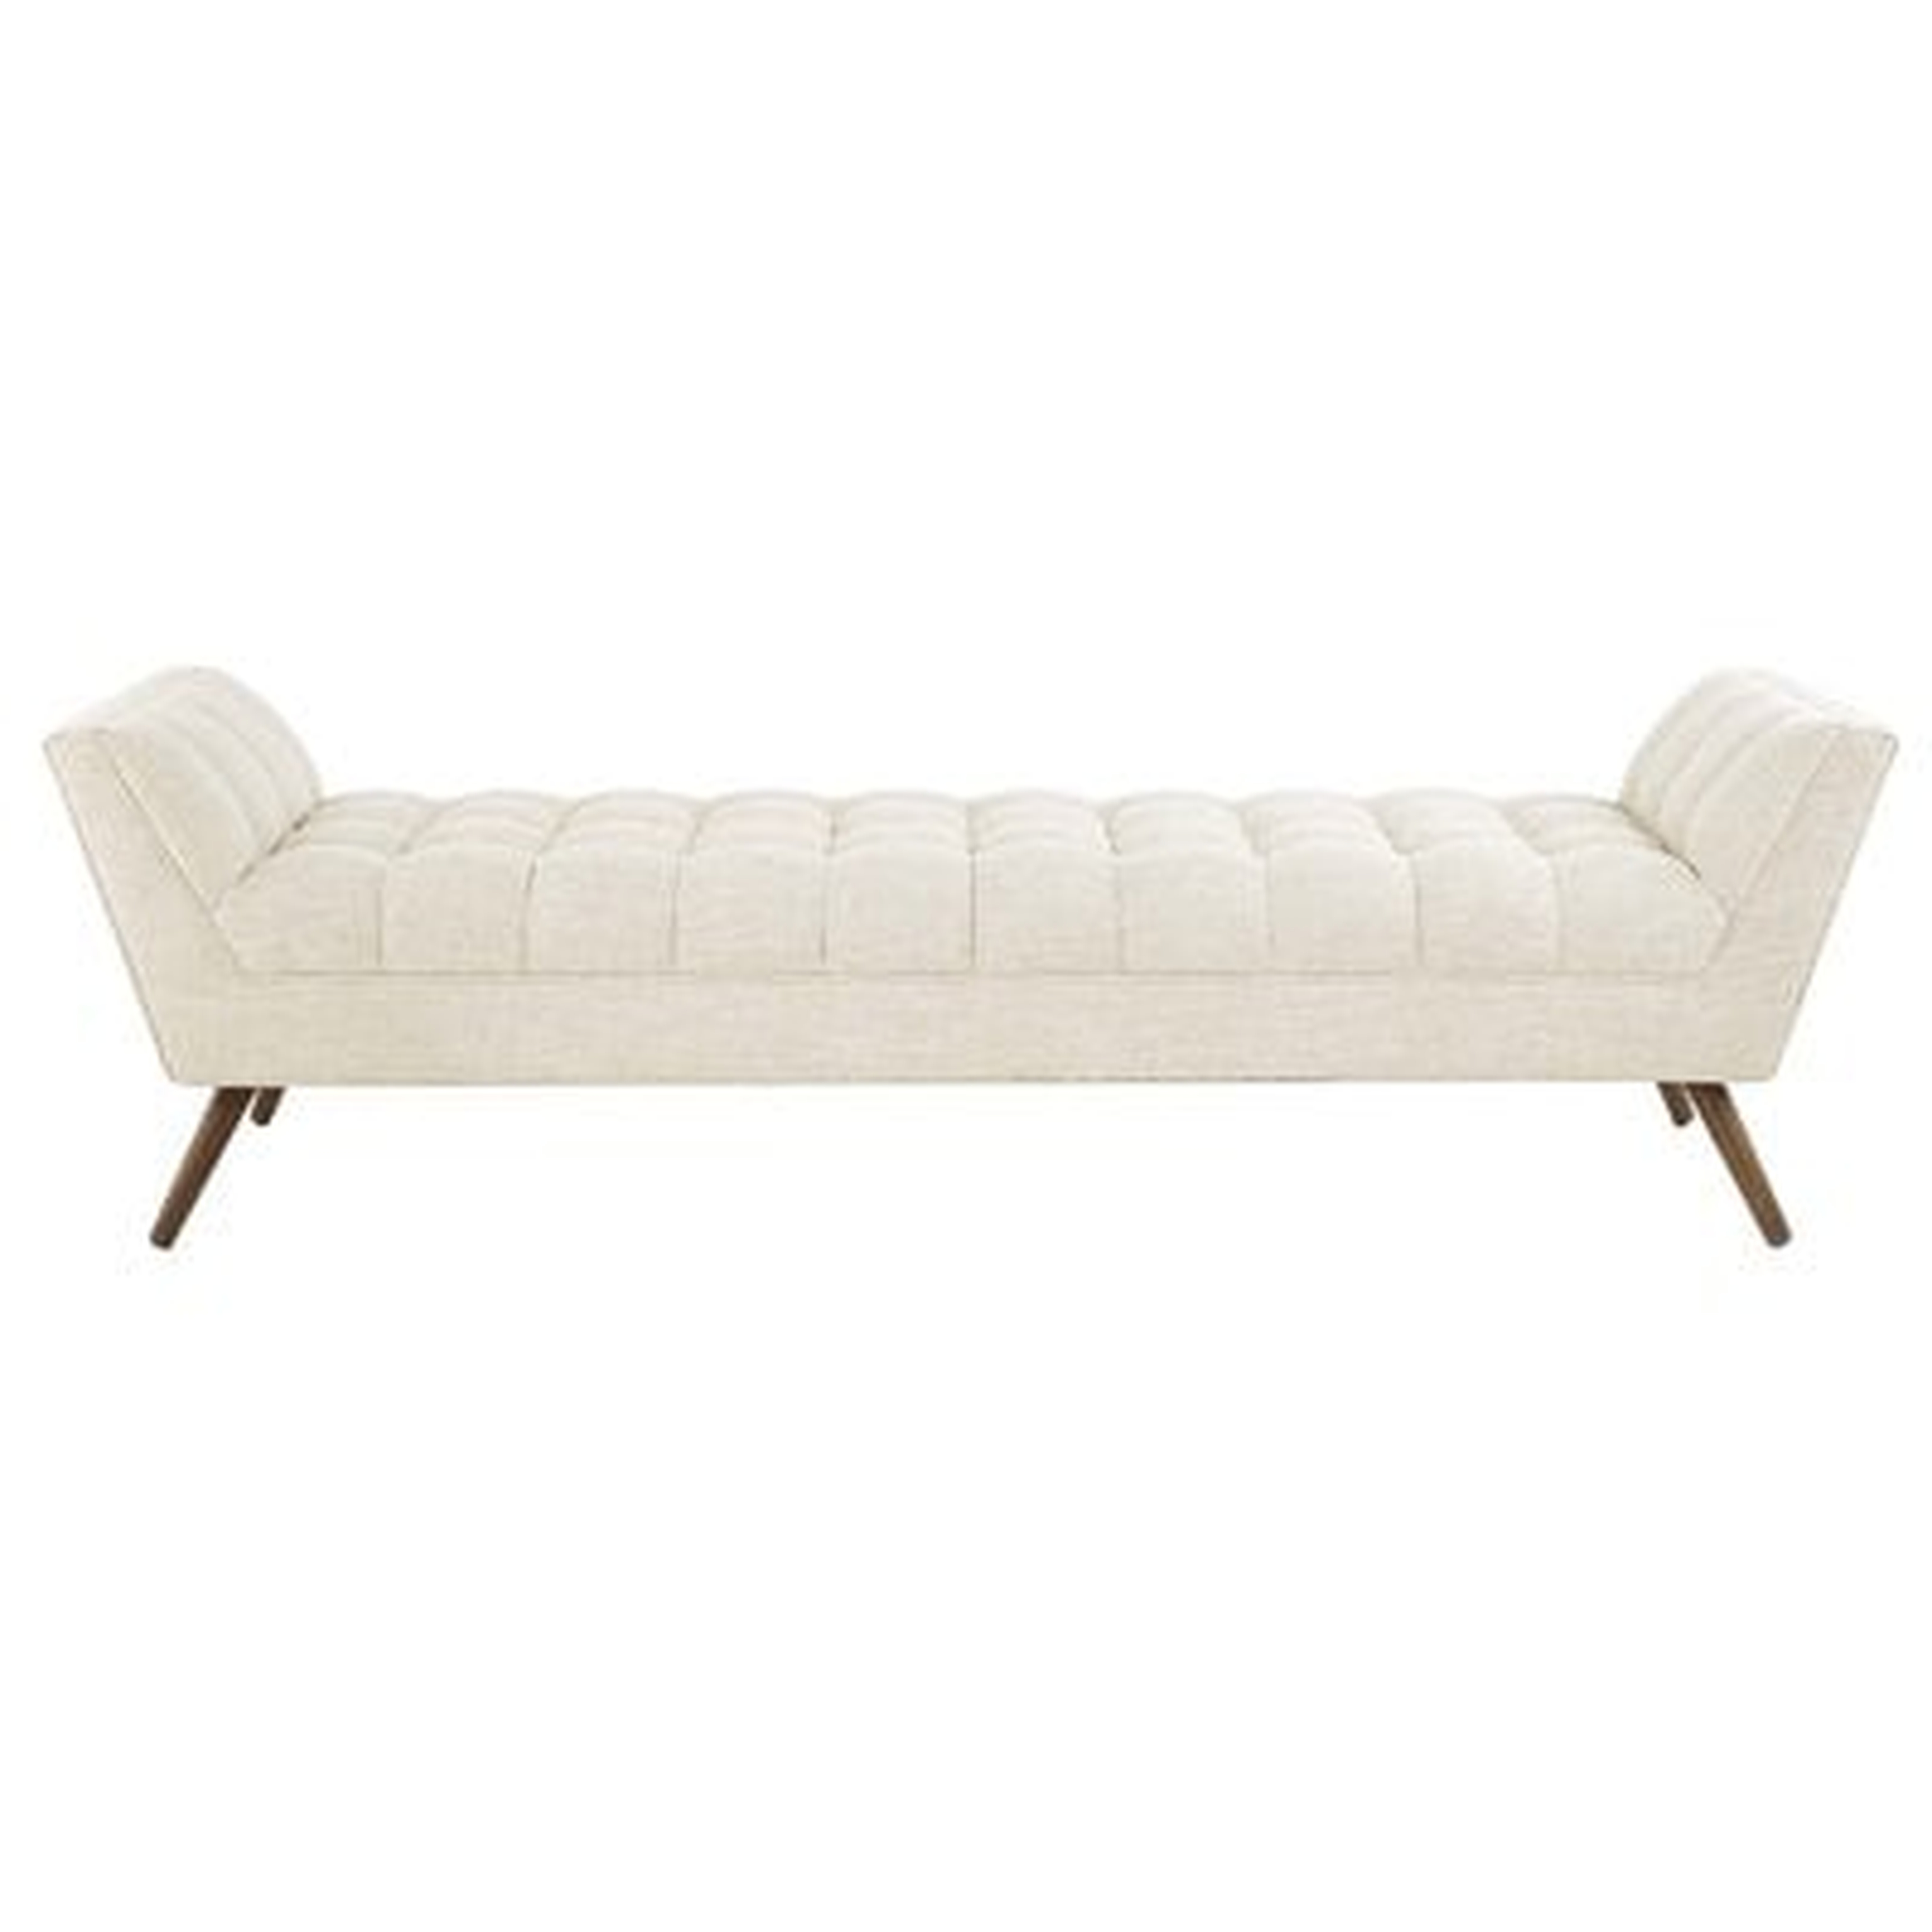 Freeborn Upholstered Bench - Wayfair